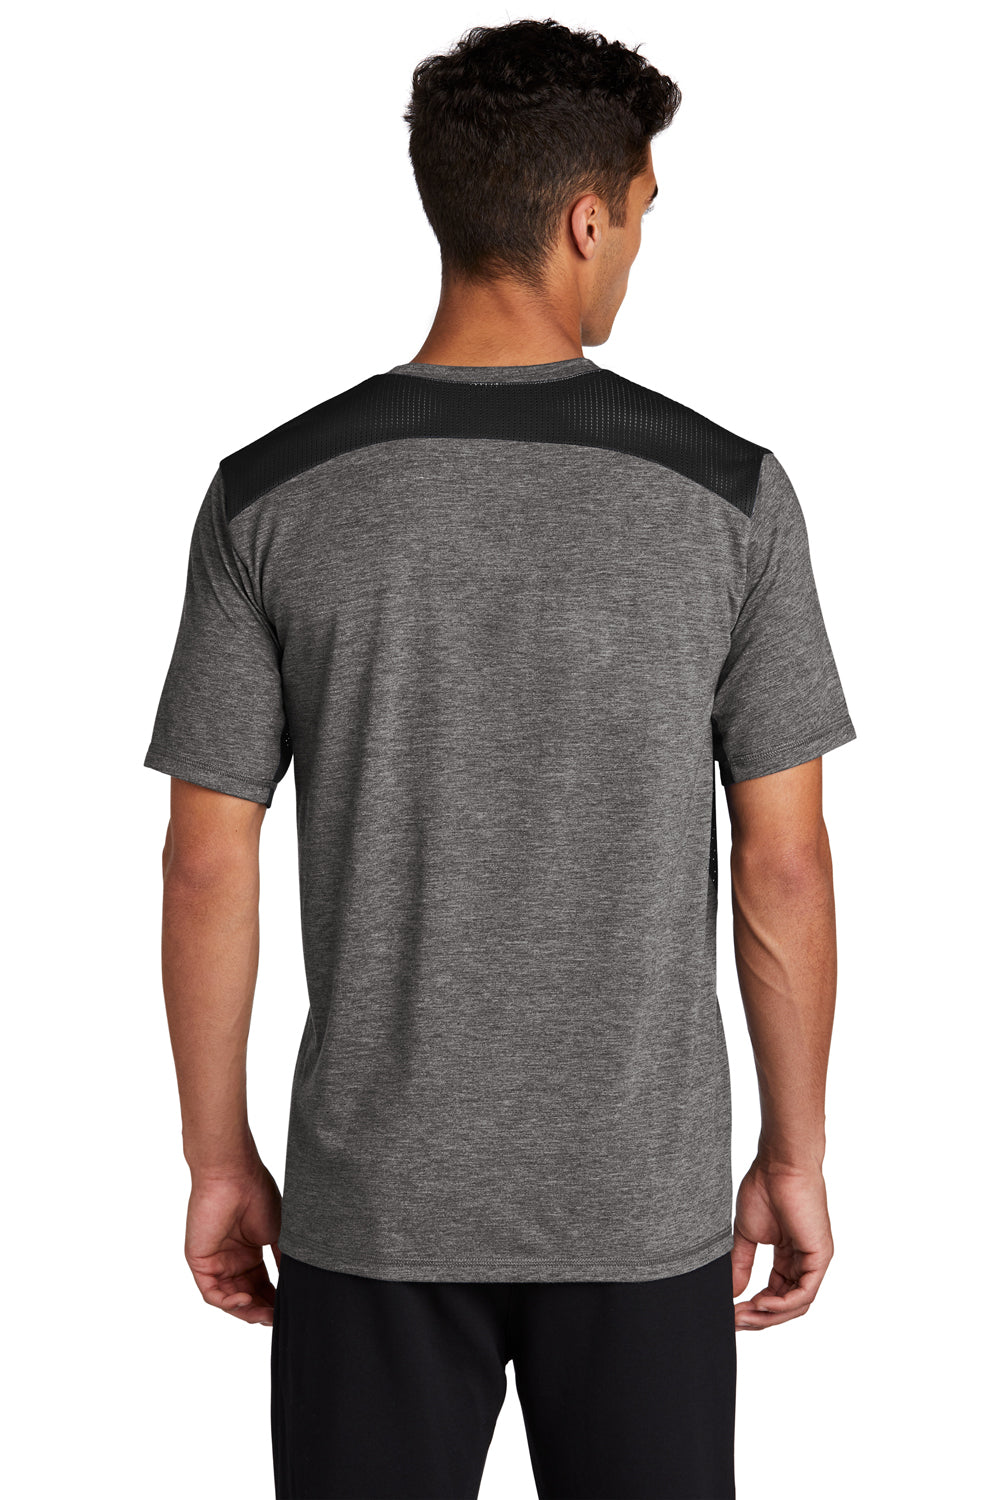 Sport-Tek Mens Draft Moisture Wicking Short Sleeve Crewneck T-Shirt Black/Heather Dark Grey Side